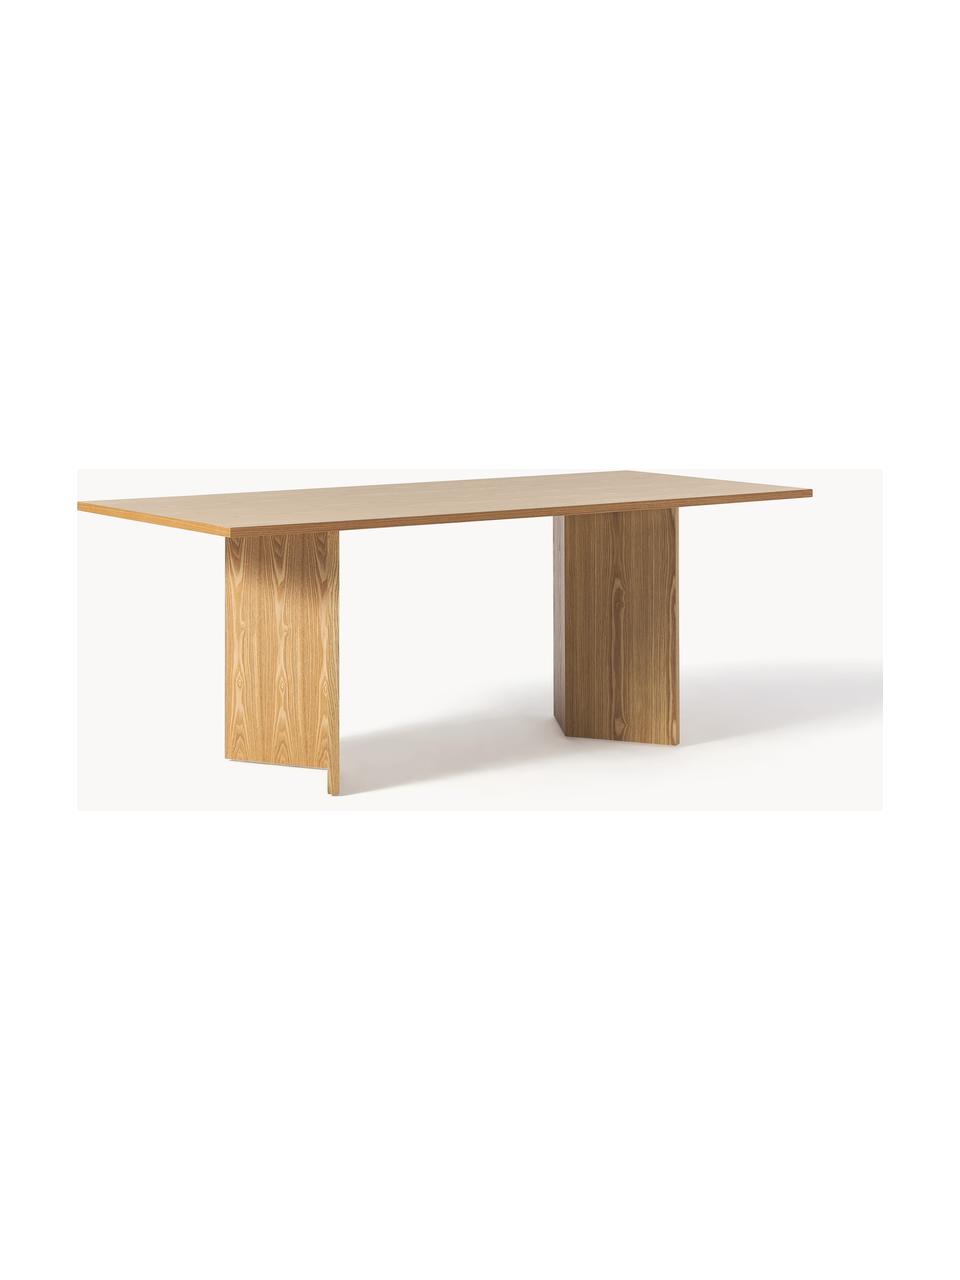 Drevený jedálenský stôl Toni, 200 x 90 cm, MDF-doska strednej hustoty s jaseňovou dyhou, lakovaná s FSC certifikátom, Jaseňové drevo, Š 200 x H 90 cm